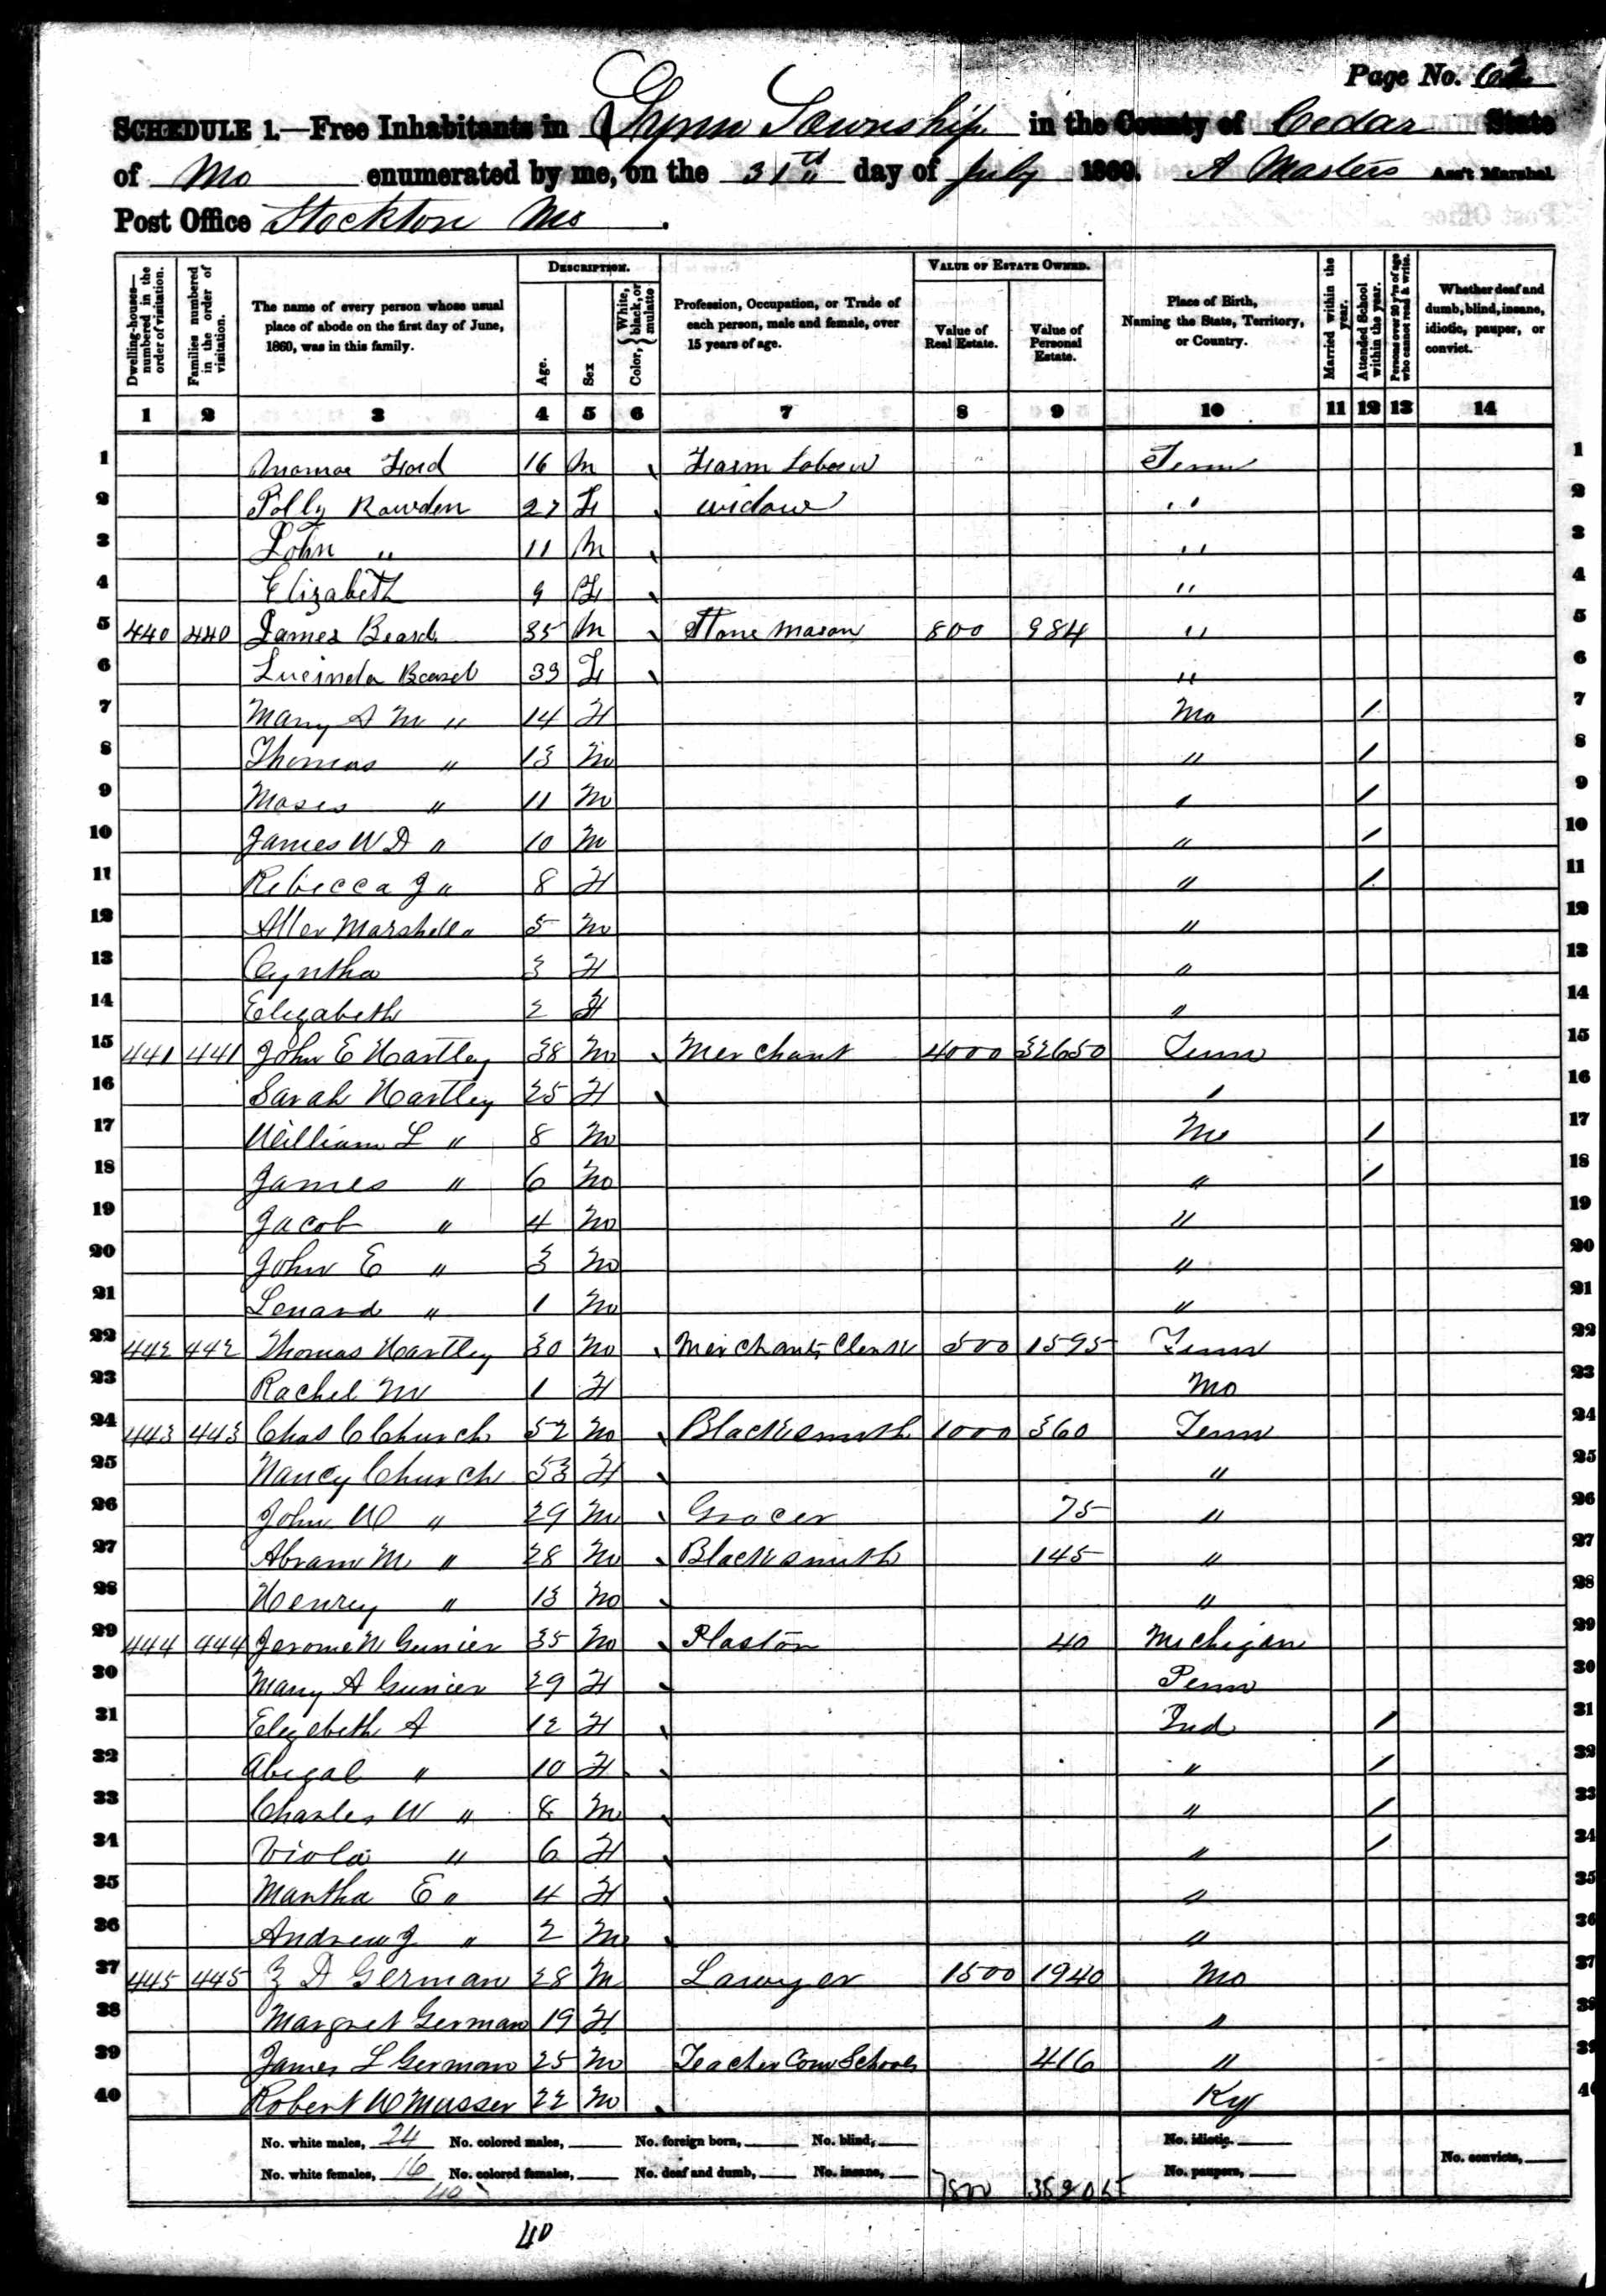 John E. Hartley, 1860 Cedar County, Missouri, census